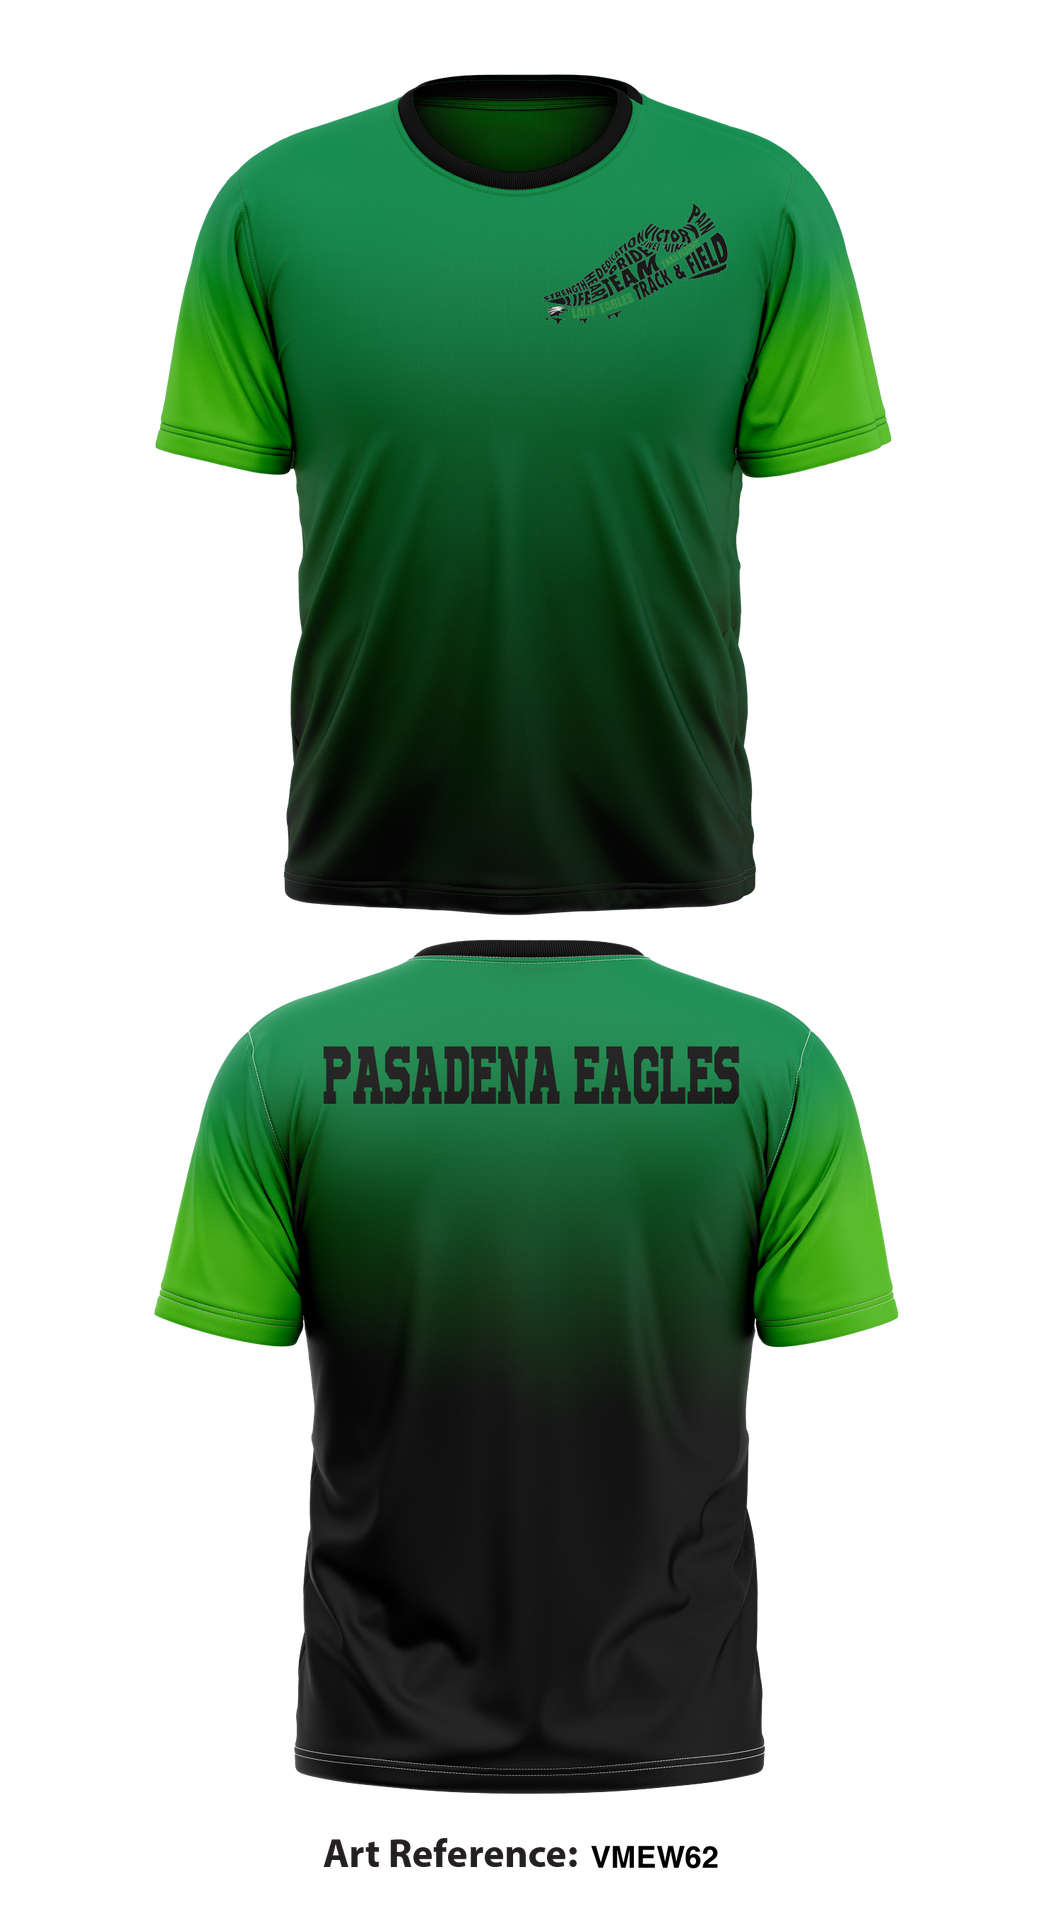 Pasadena Eagles Track and Field 37013086 Short Sleeve Performance Shirt - 1